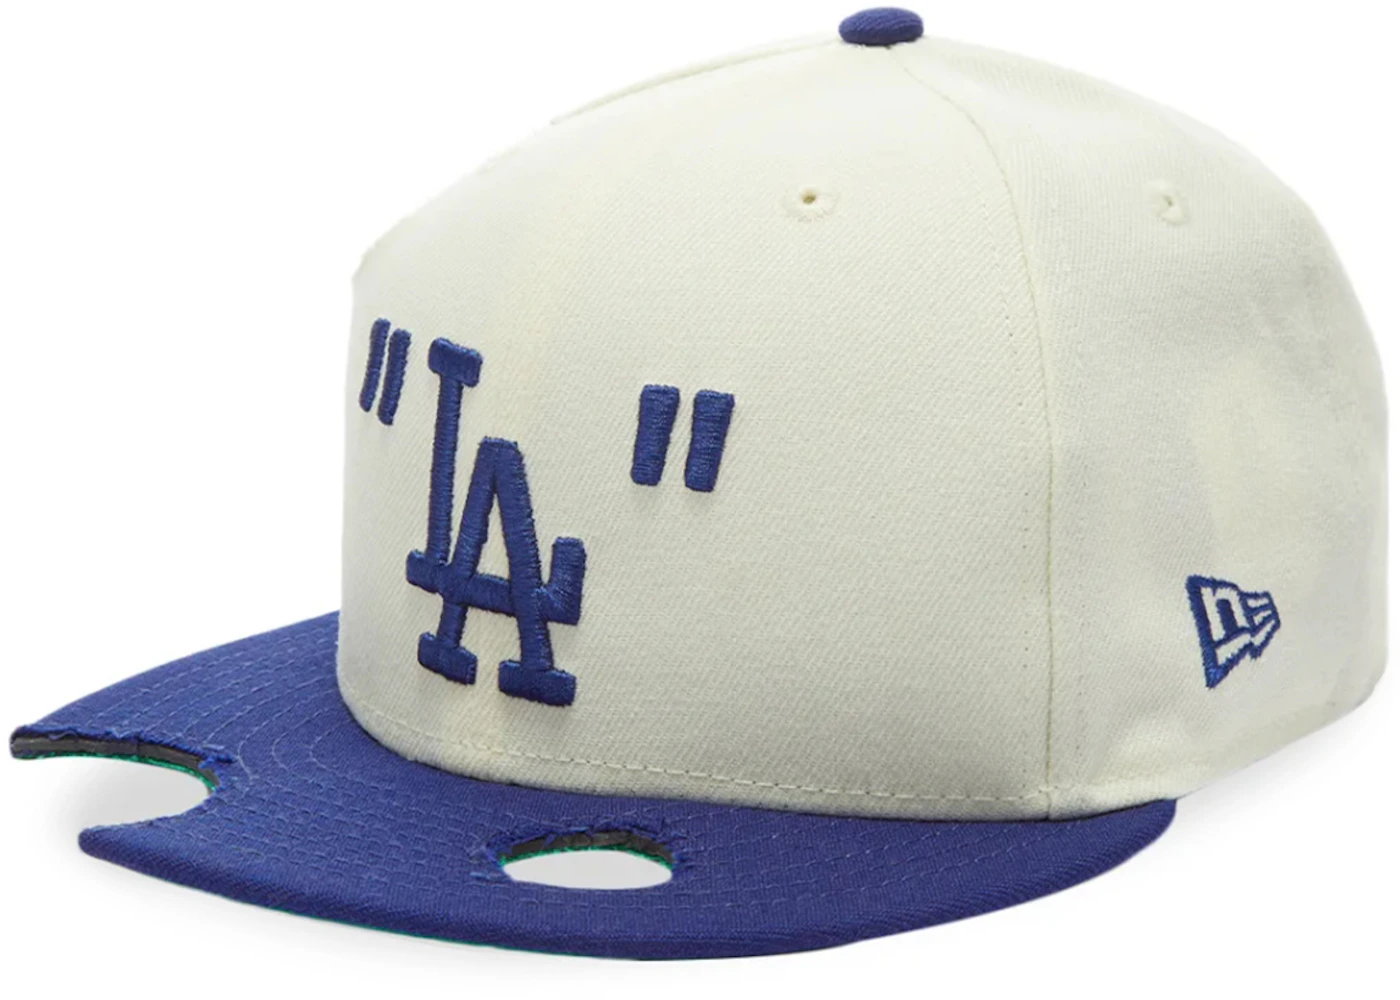 Off-White x MLB Los Angeles Dodgers Cap Cream/Blue